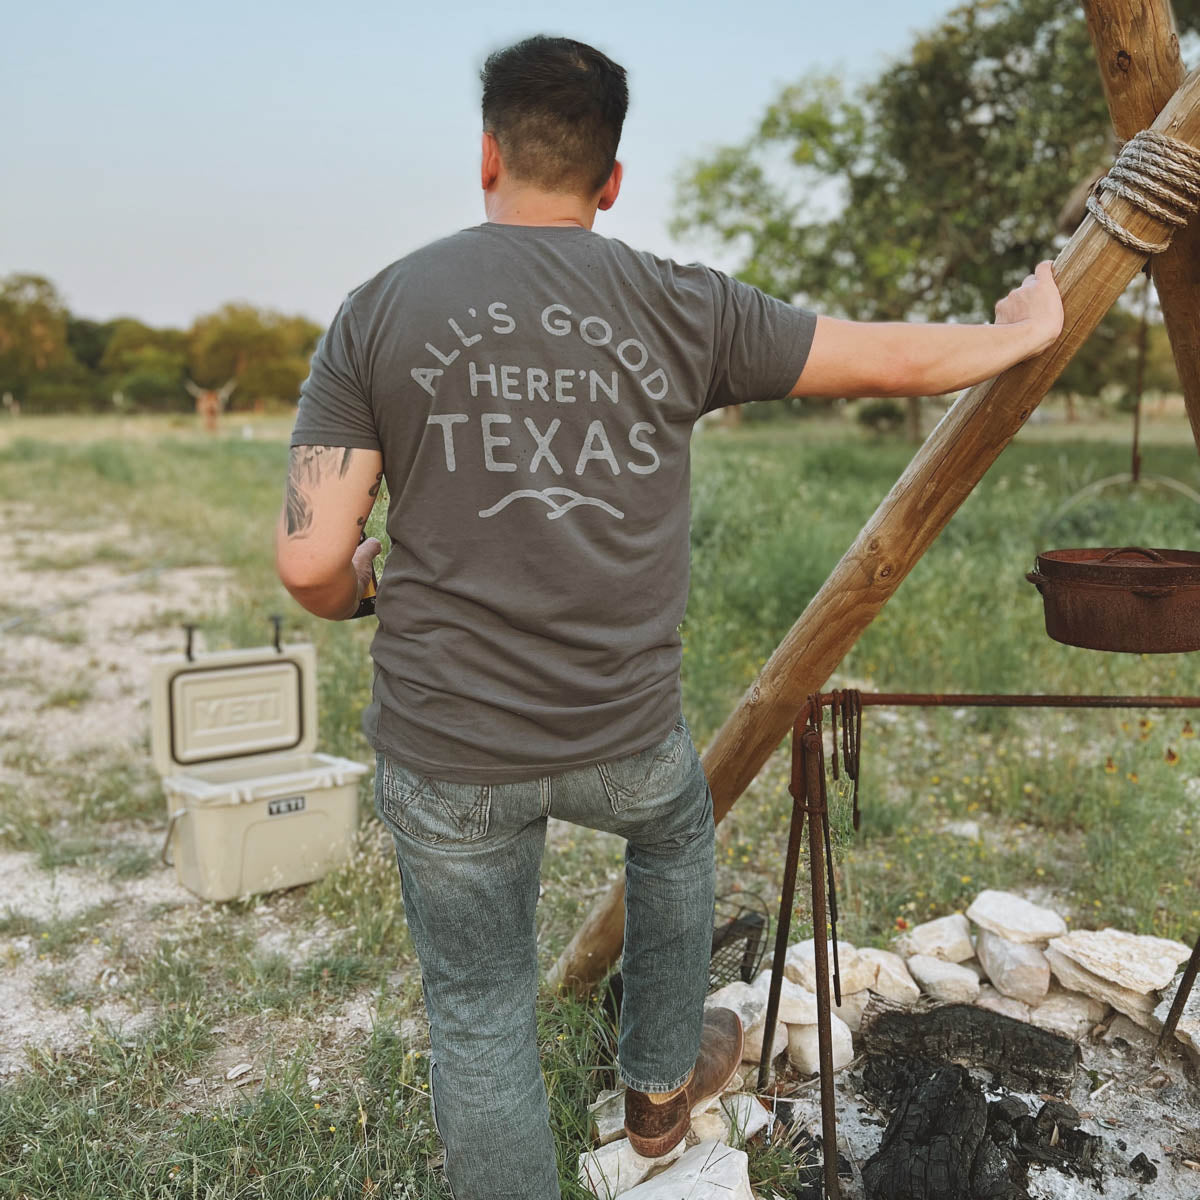 All's Good Here'n Texas T - Shirt